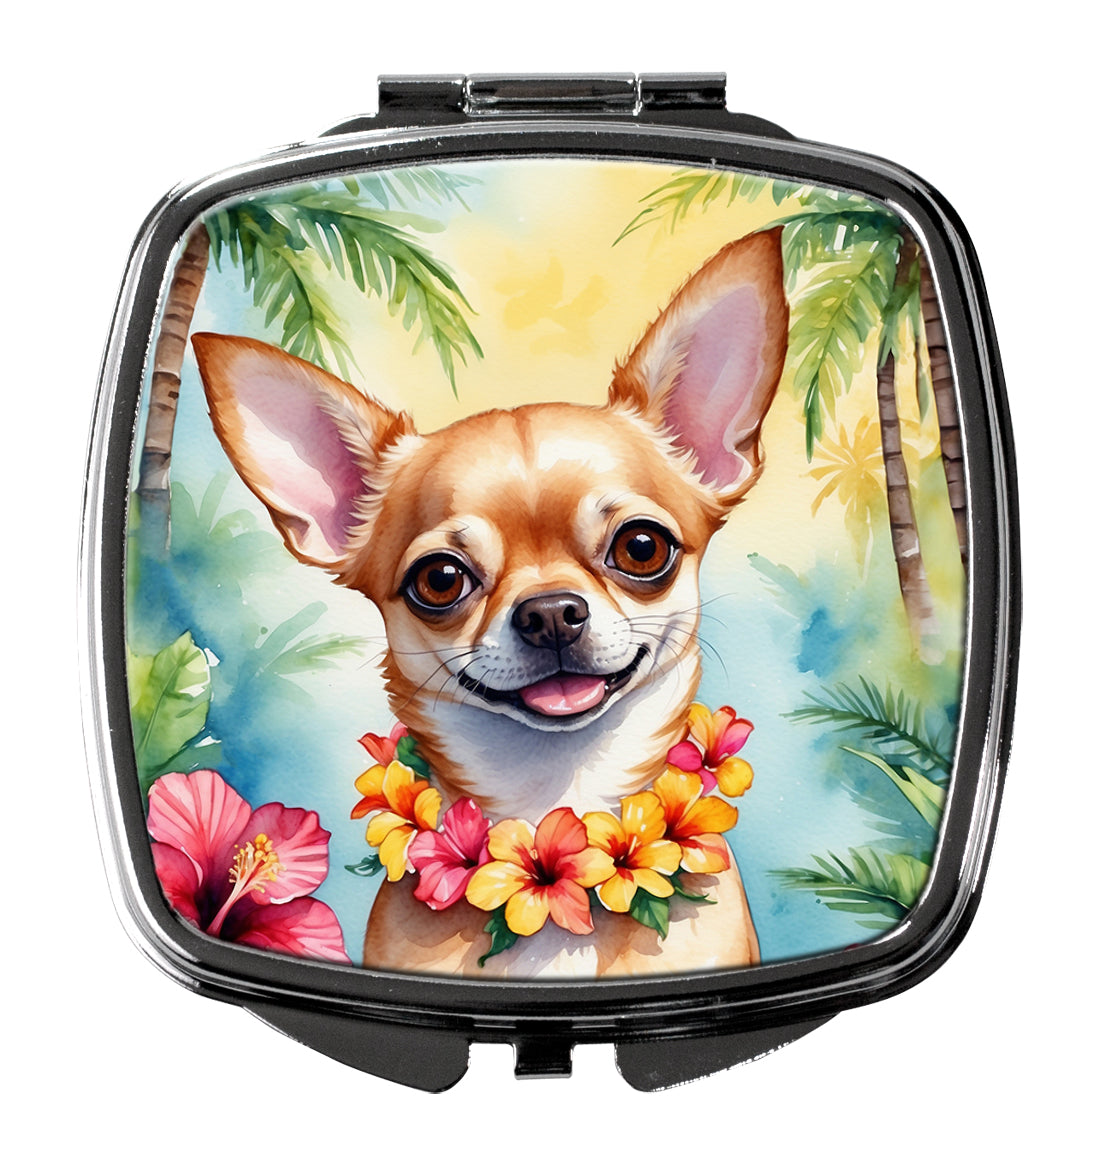 Buy this Chihuahua Luau Compact Mirror